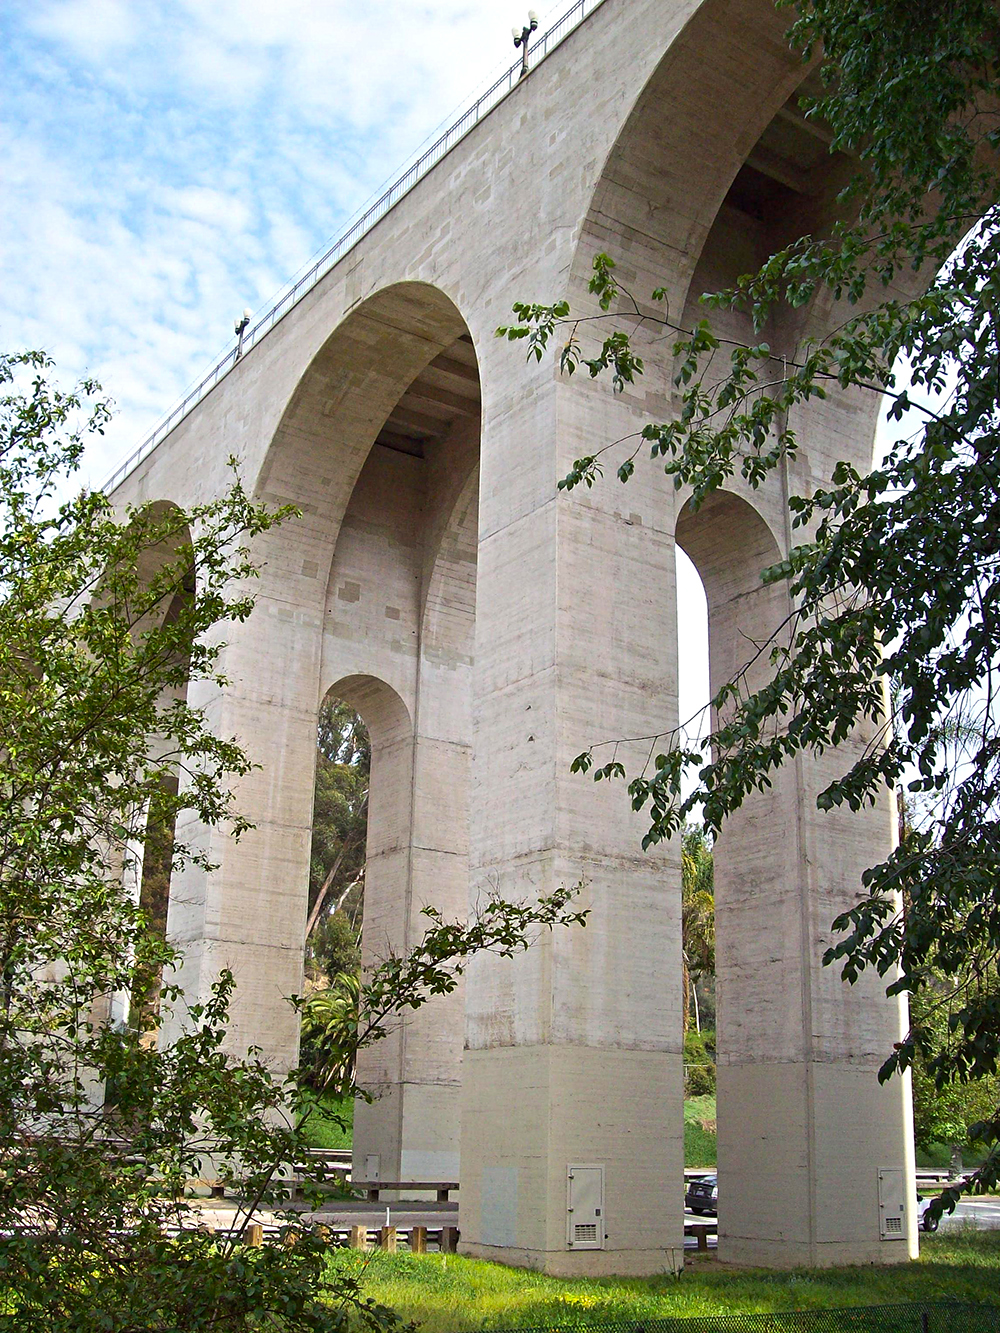 Laurel Street Bridge